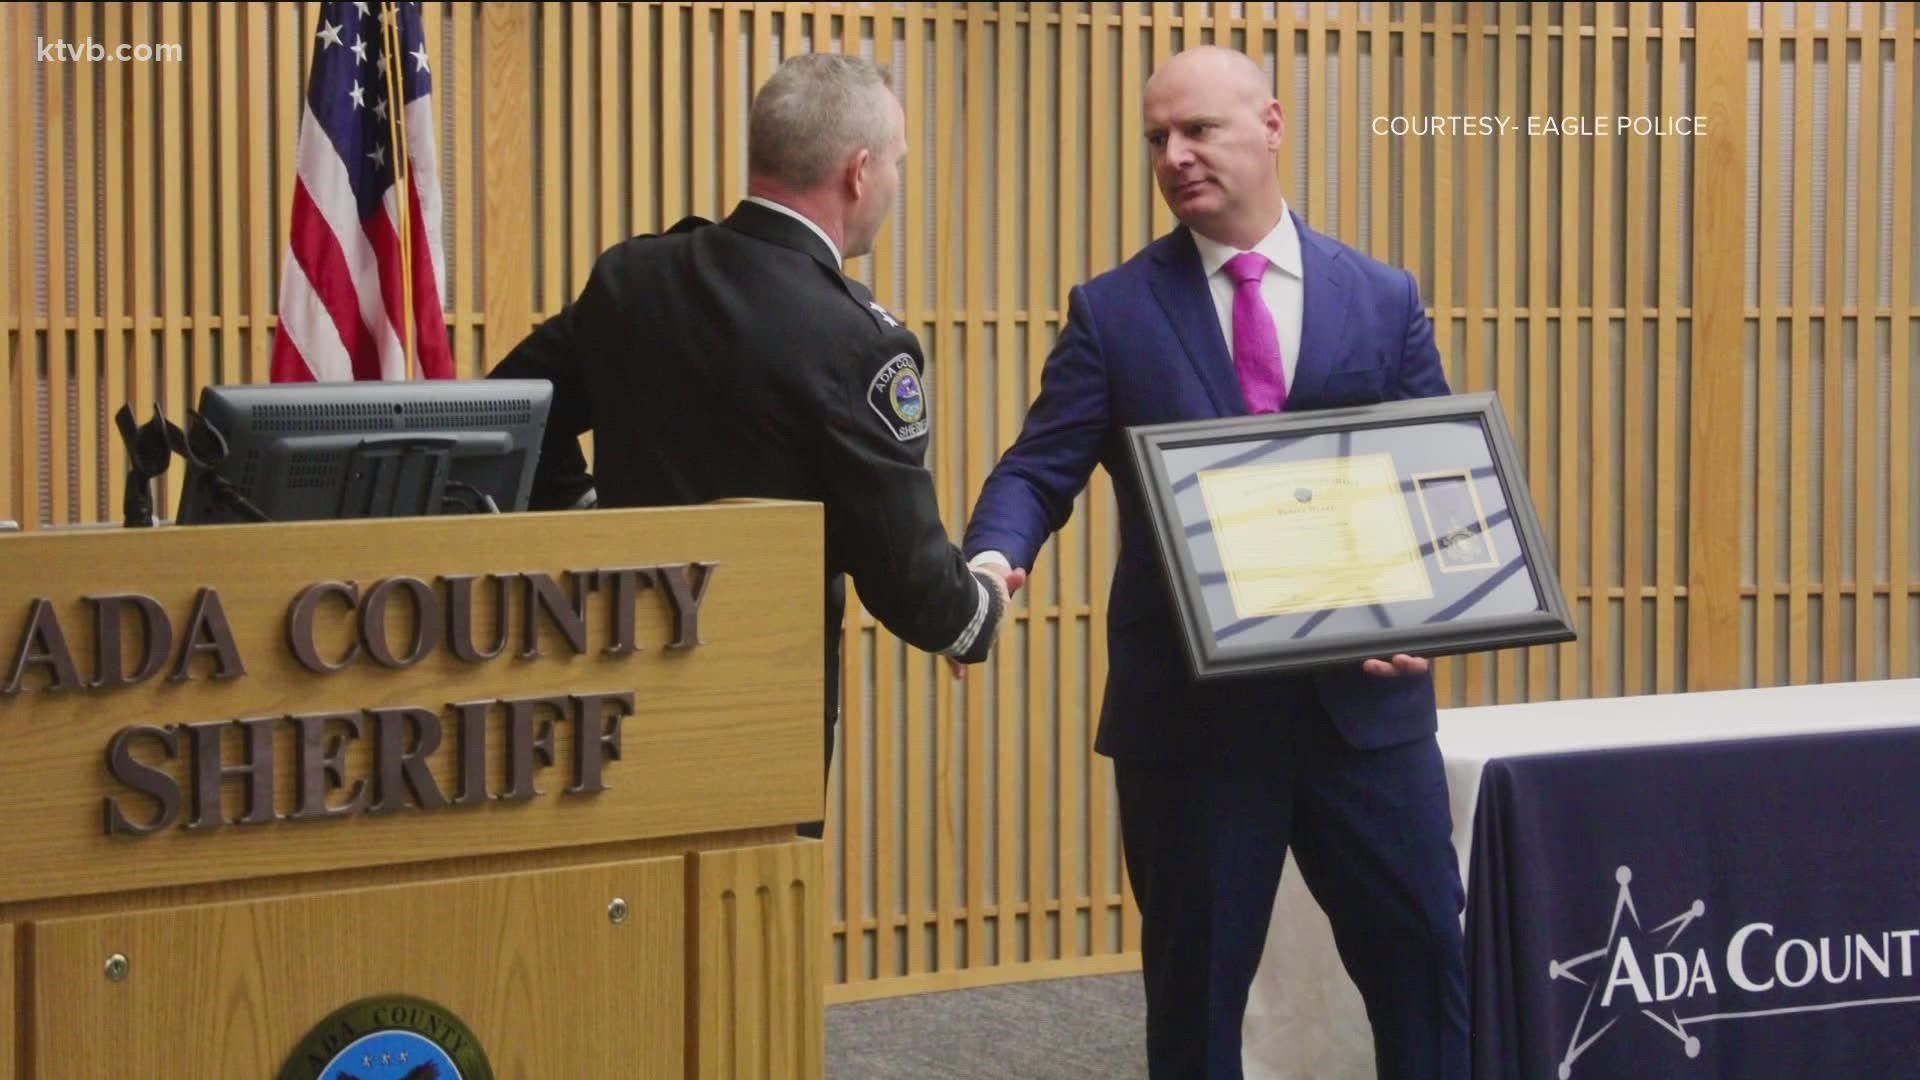 The Ada County Sheriff on Wednesday presented a Purple Heart to Deputy Brandon Austin.